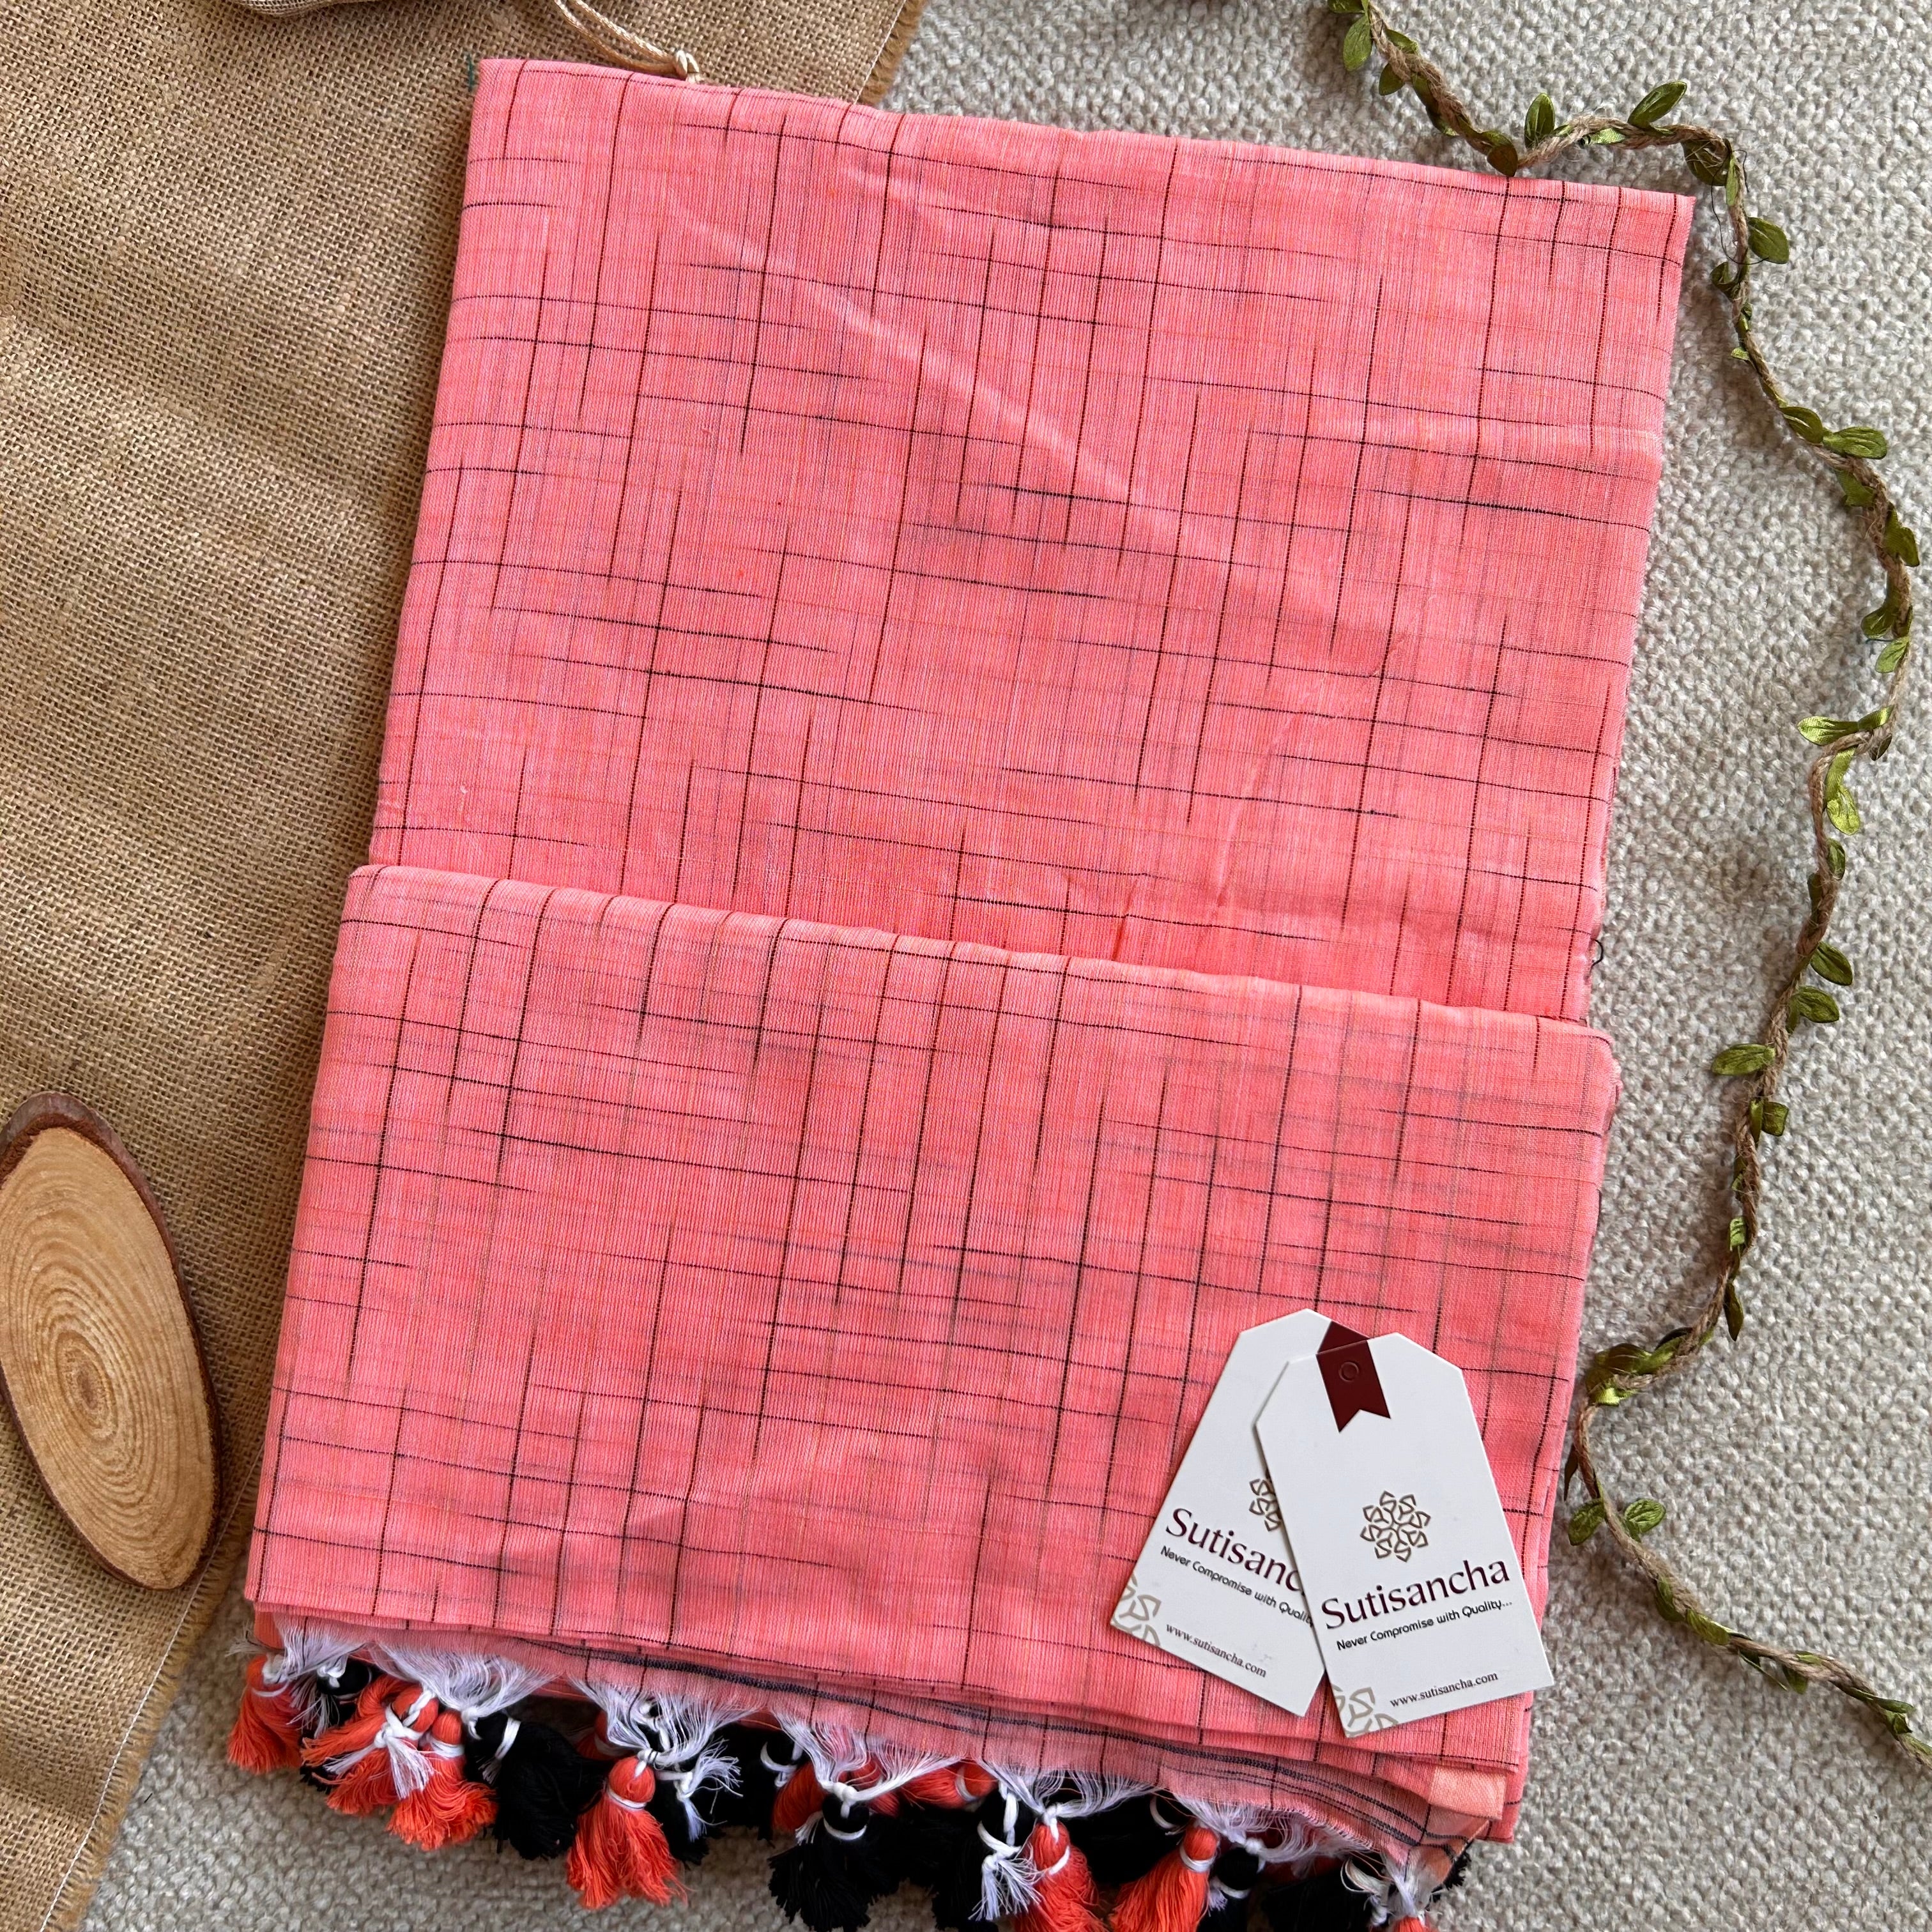 Sutisancha Peach Handloom Cotton Saree with Trendy Kotki Checks Design